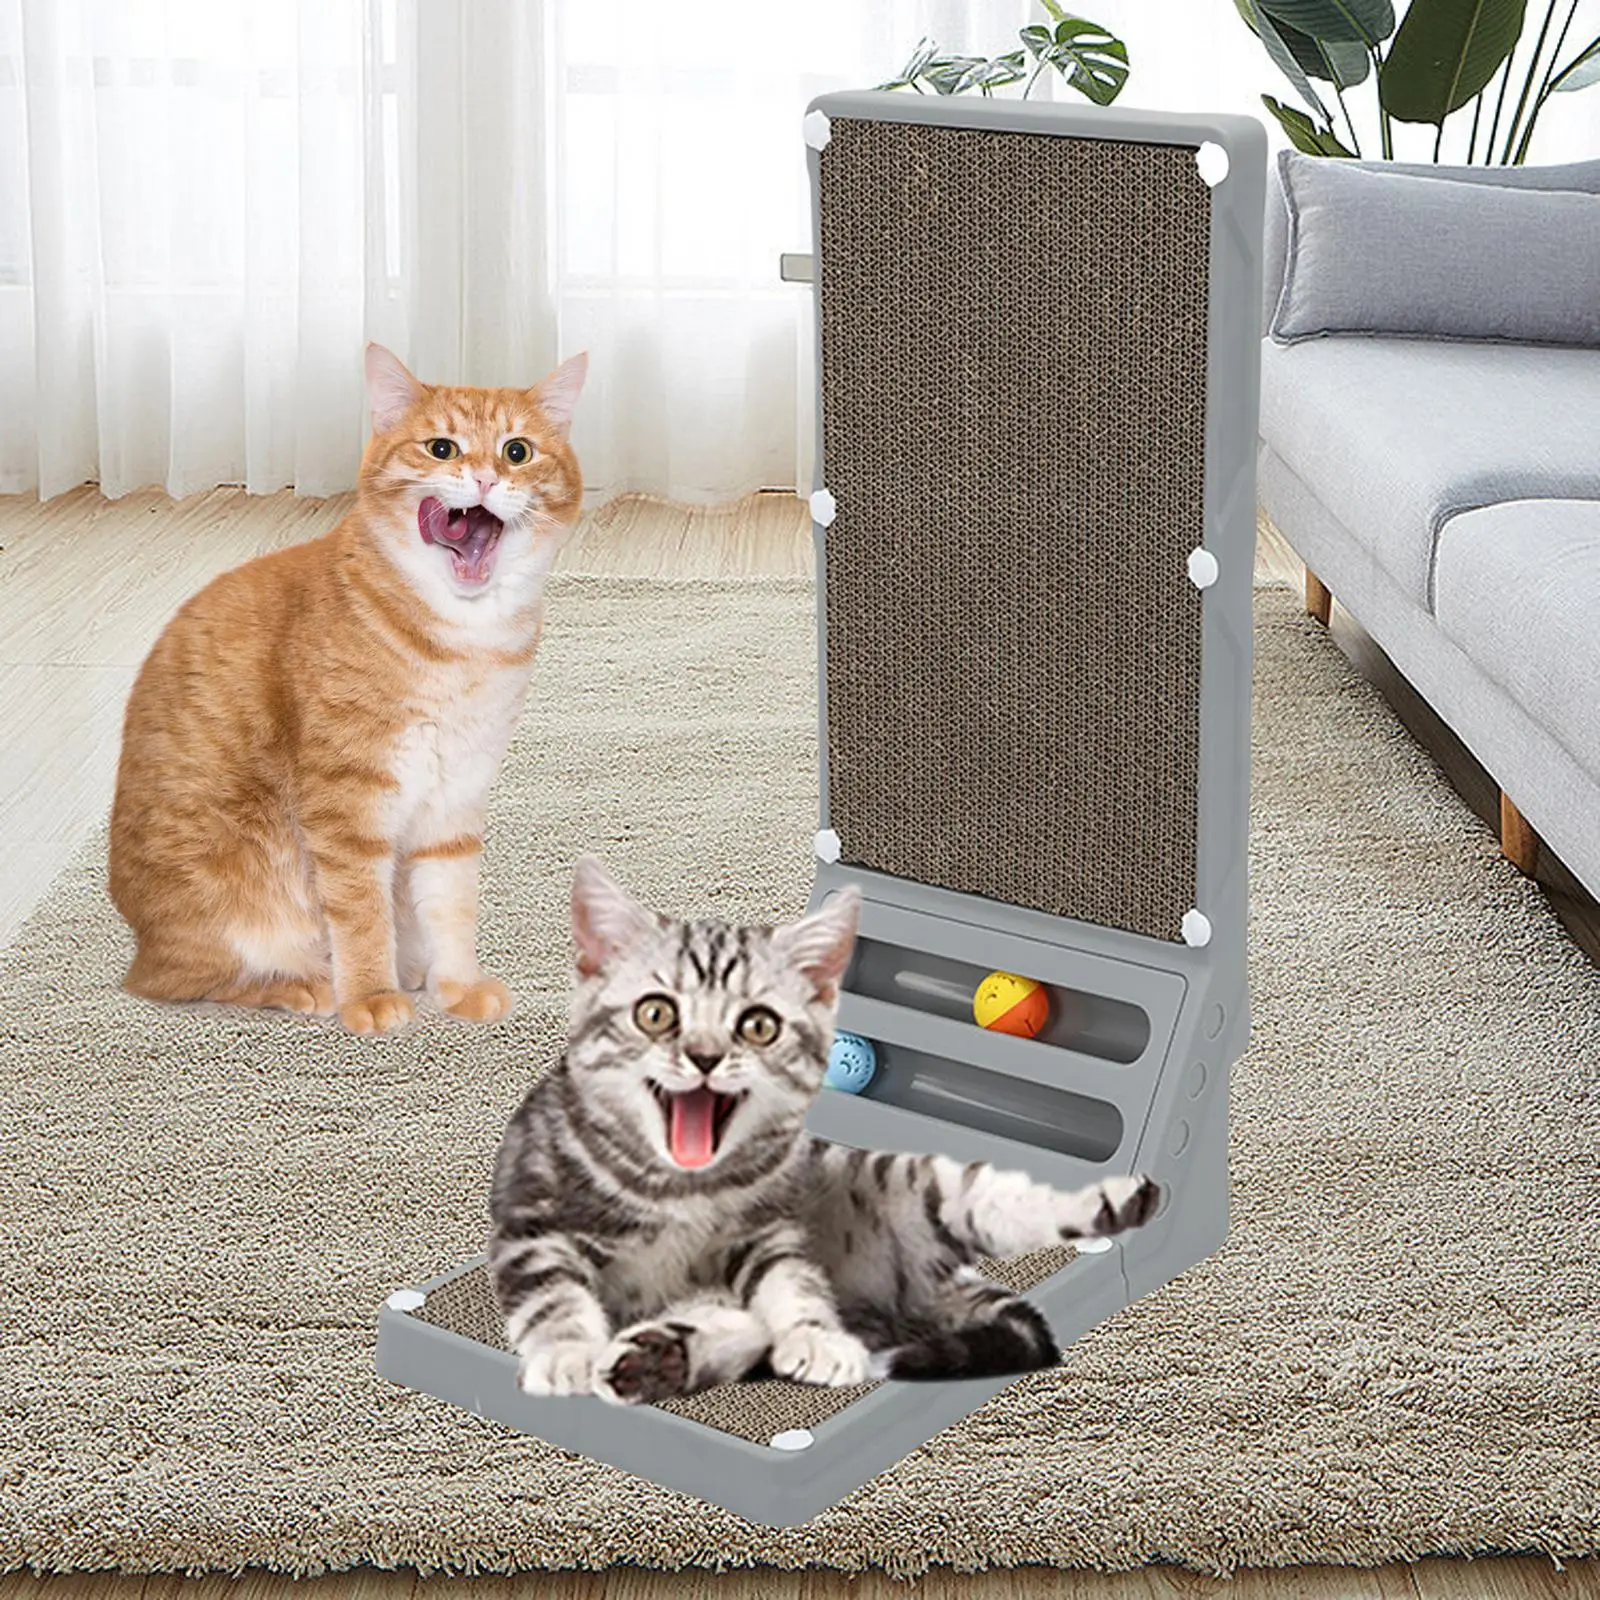 Cat Scratching Post Cat Scratching Toy Cat Scratcher Corrugated Cardboard for Kitten